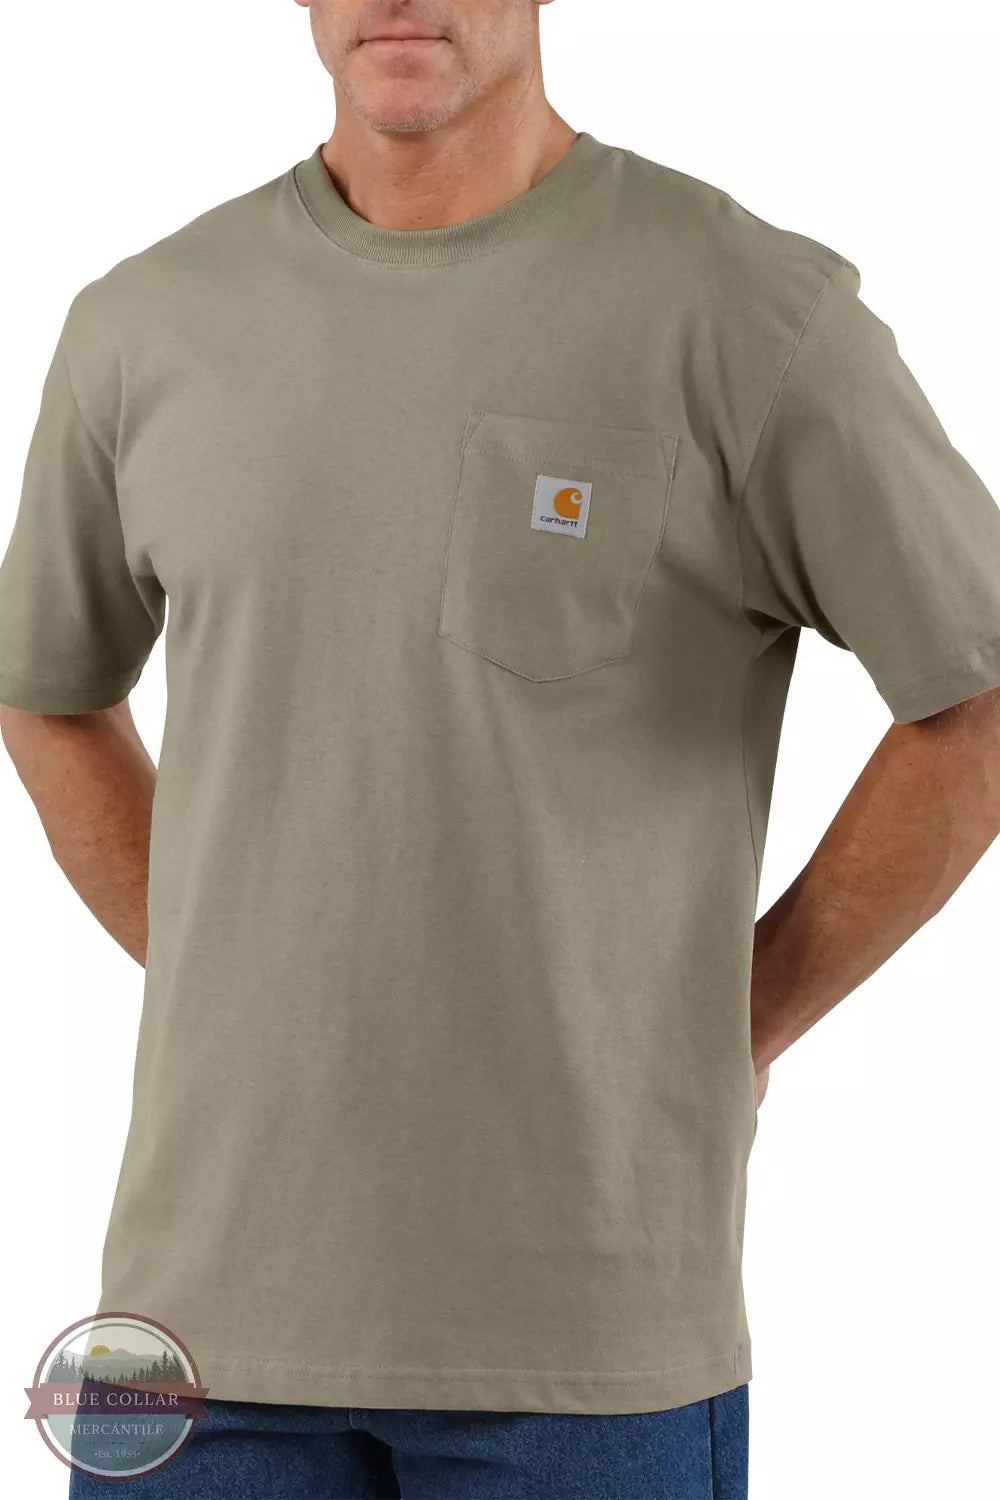 Carhartt K87 Loose Fit Heavyweight Short Sleeve Pocket T-Shirt Big and Tall Basic Colors Desert Front View